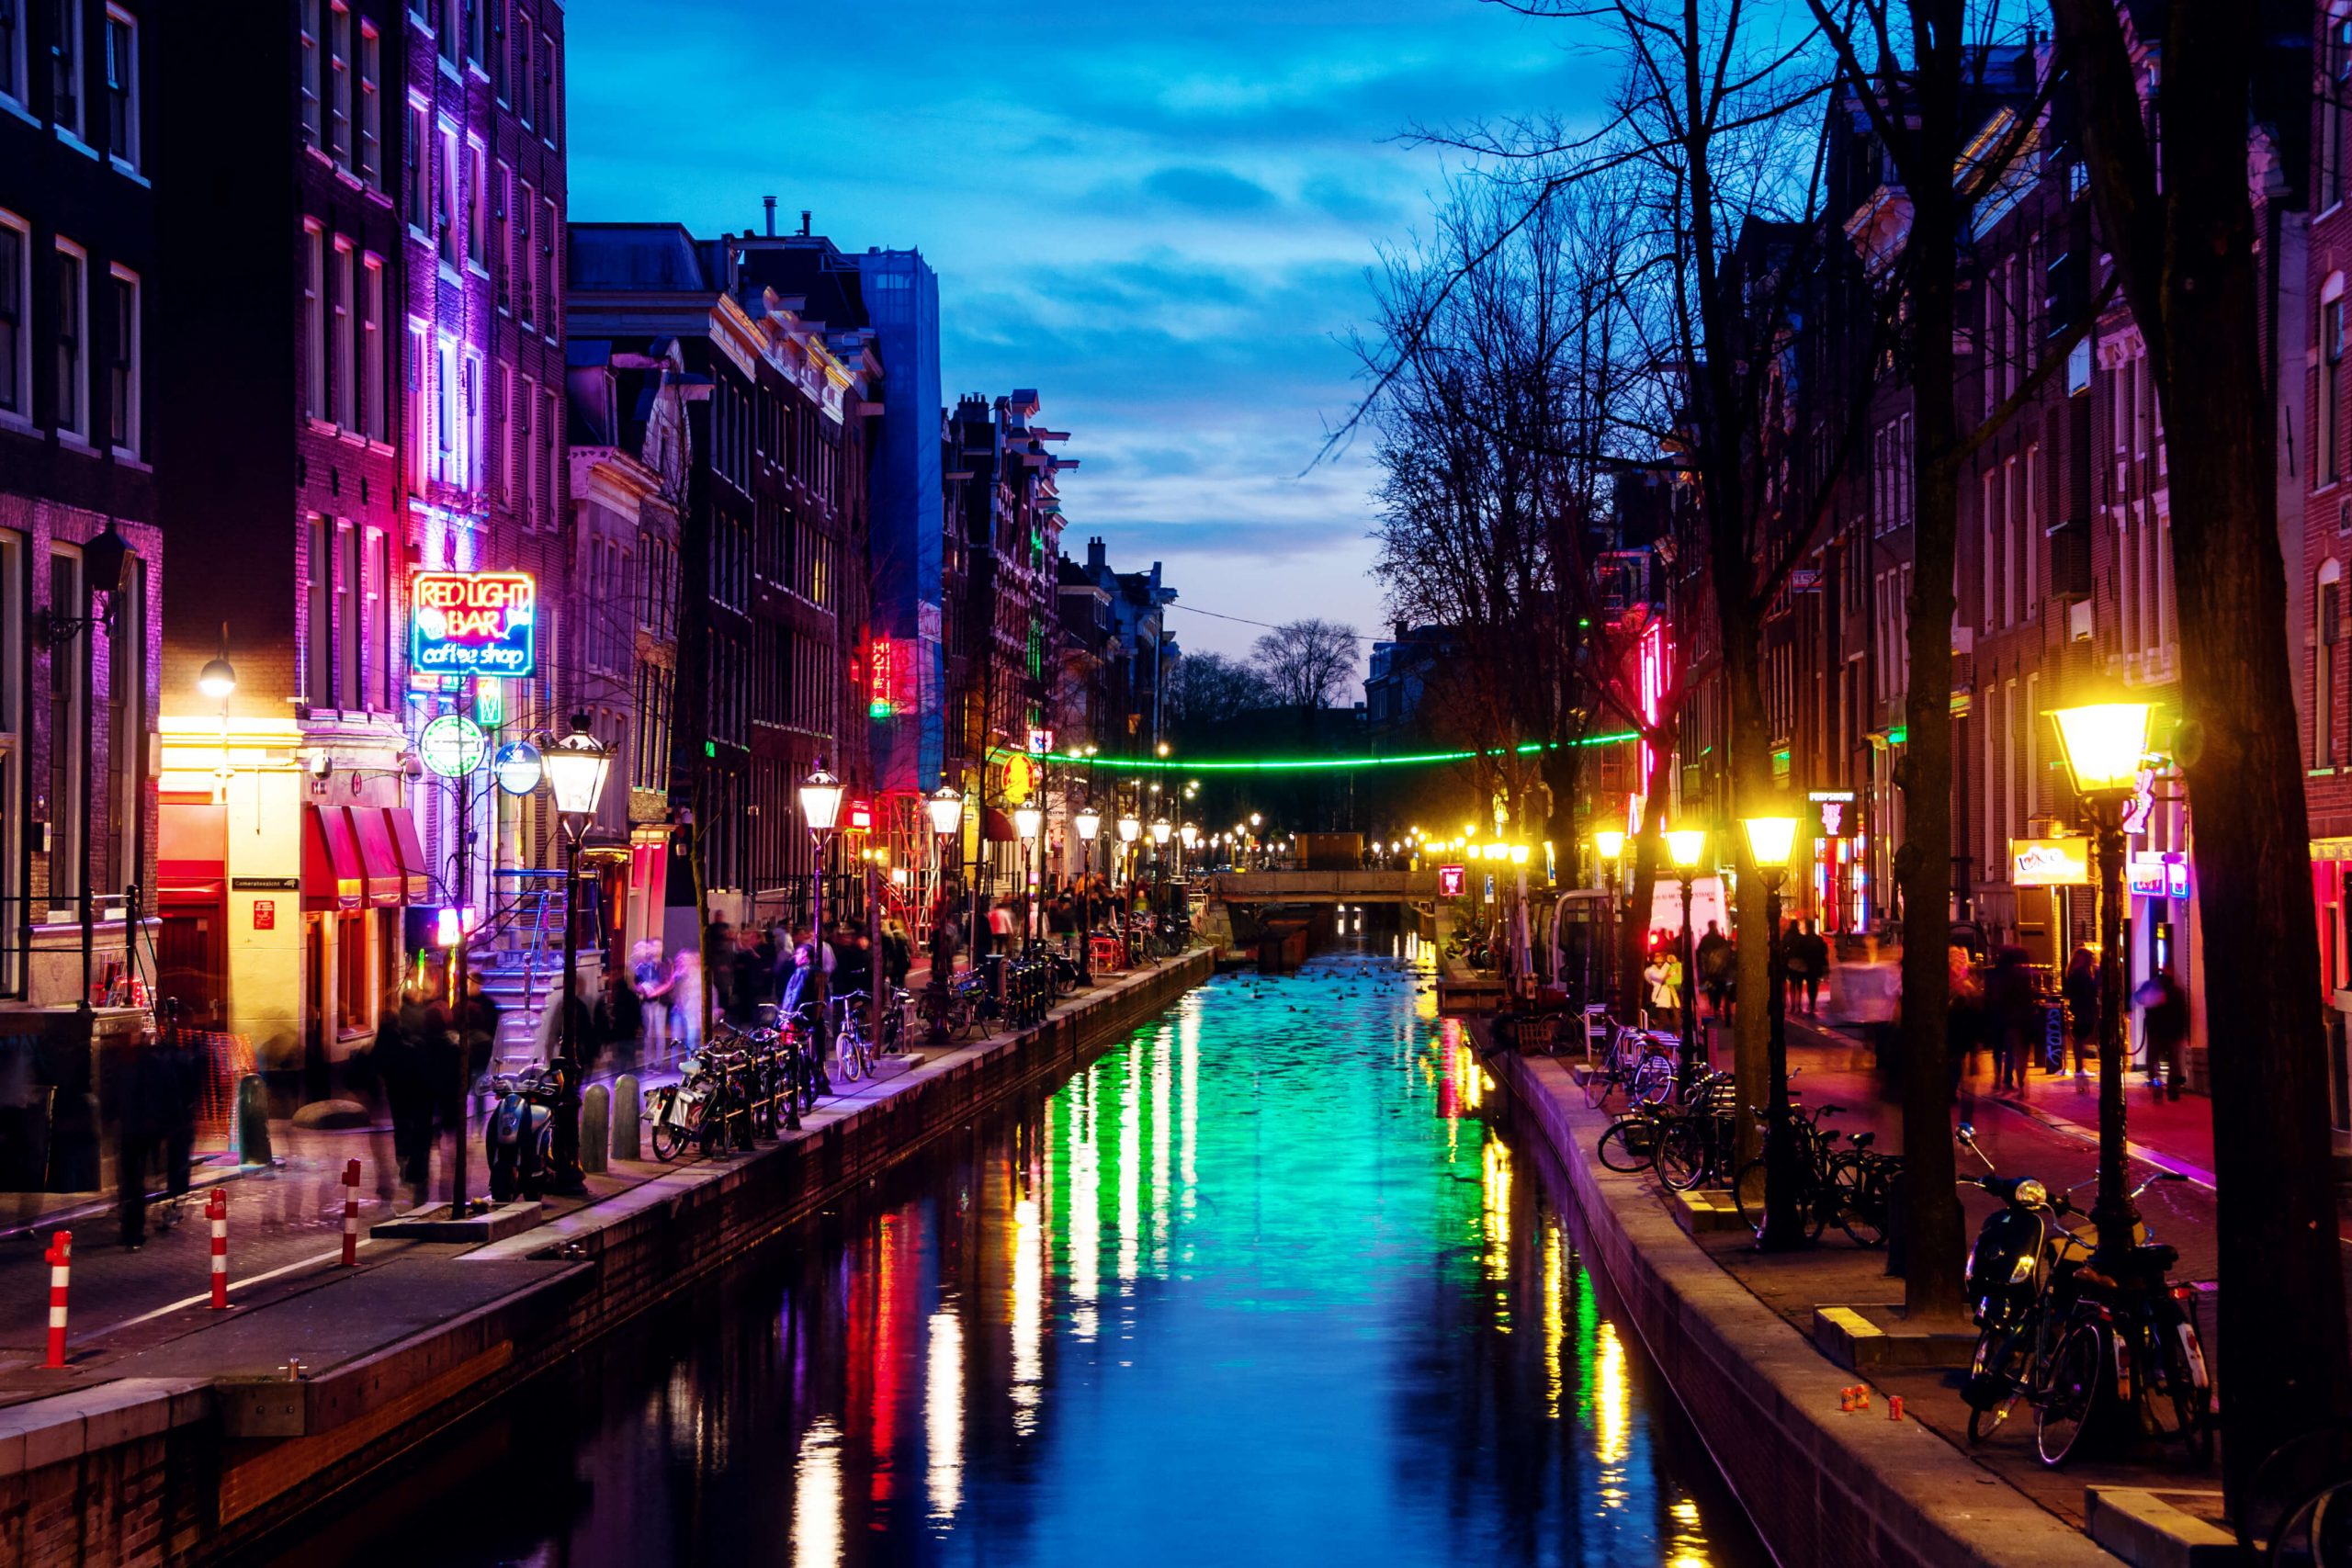 Nightlife in Amsterdam